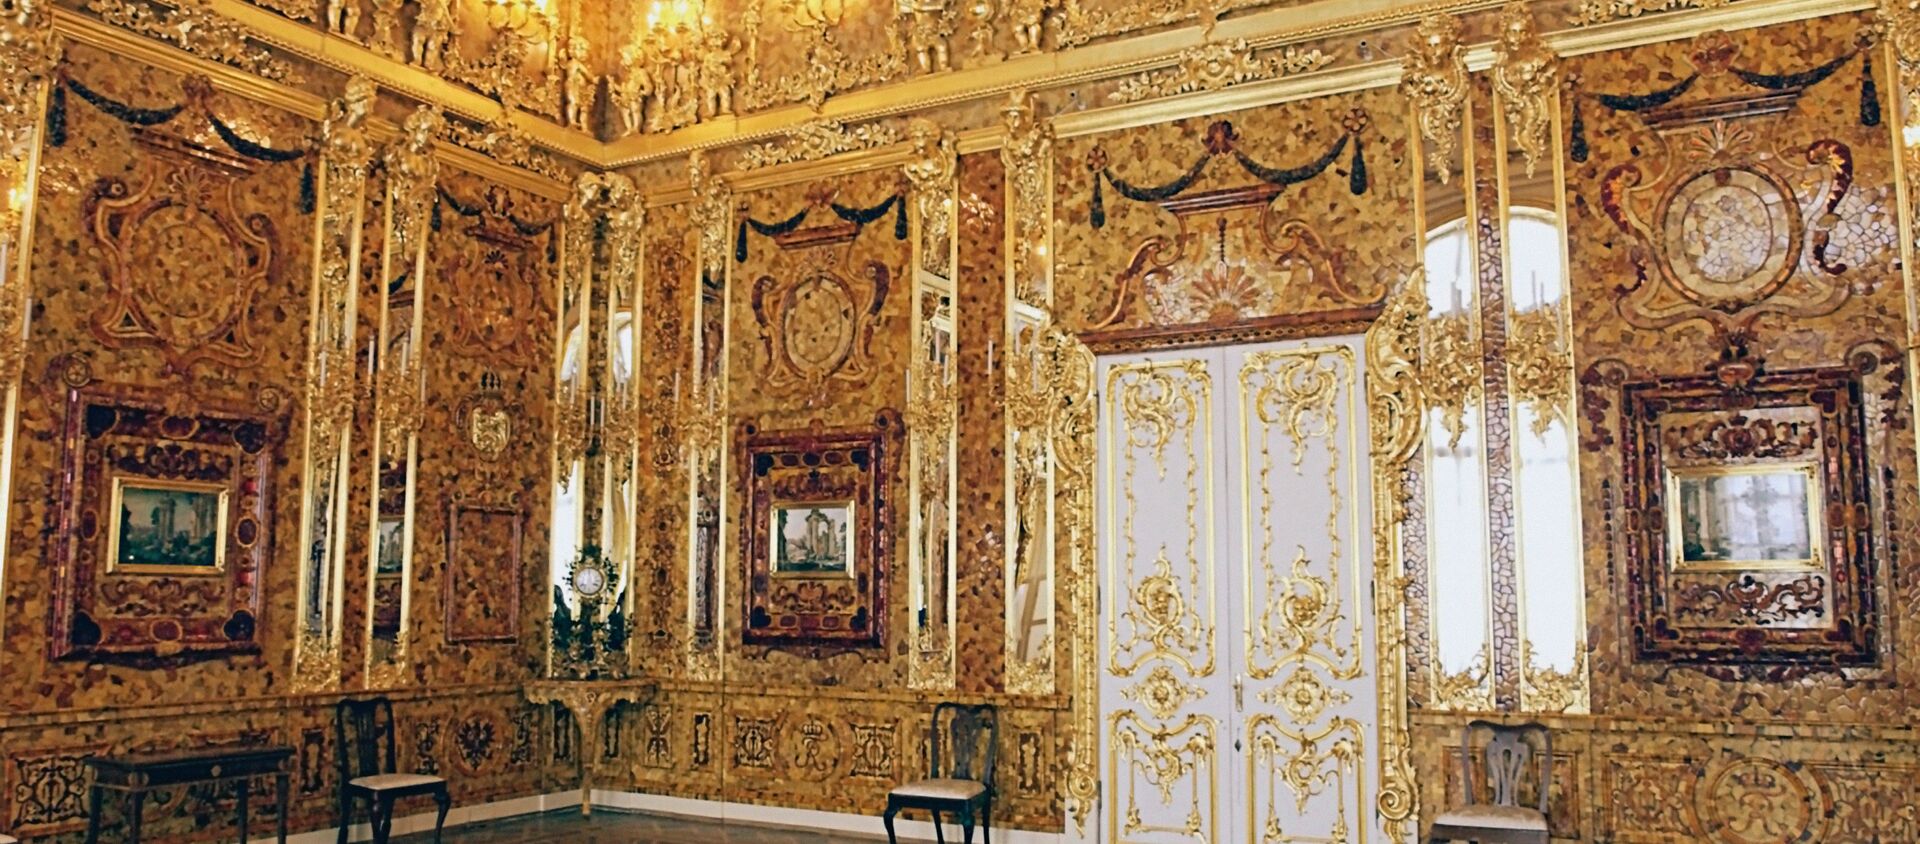 The famous Amber Room in Catherine Palace near St. Petersburg, Pushkin. (File) - Sputnik International, 1920, 28.05.2021